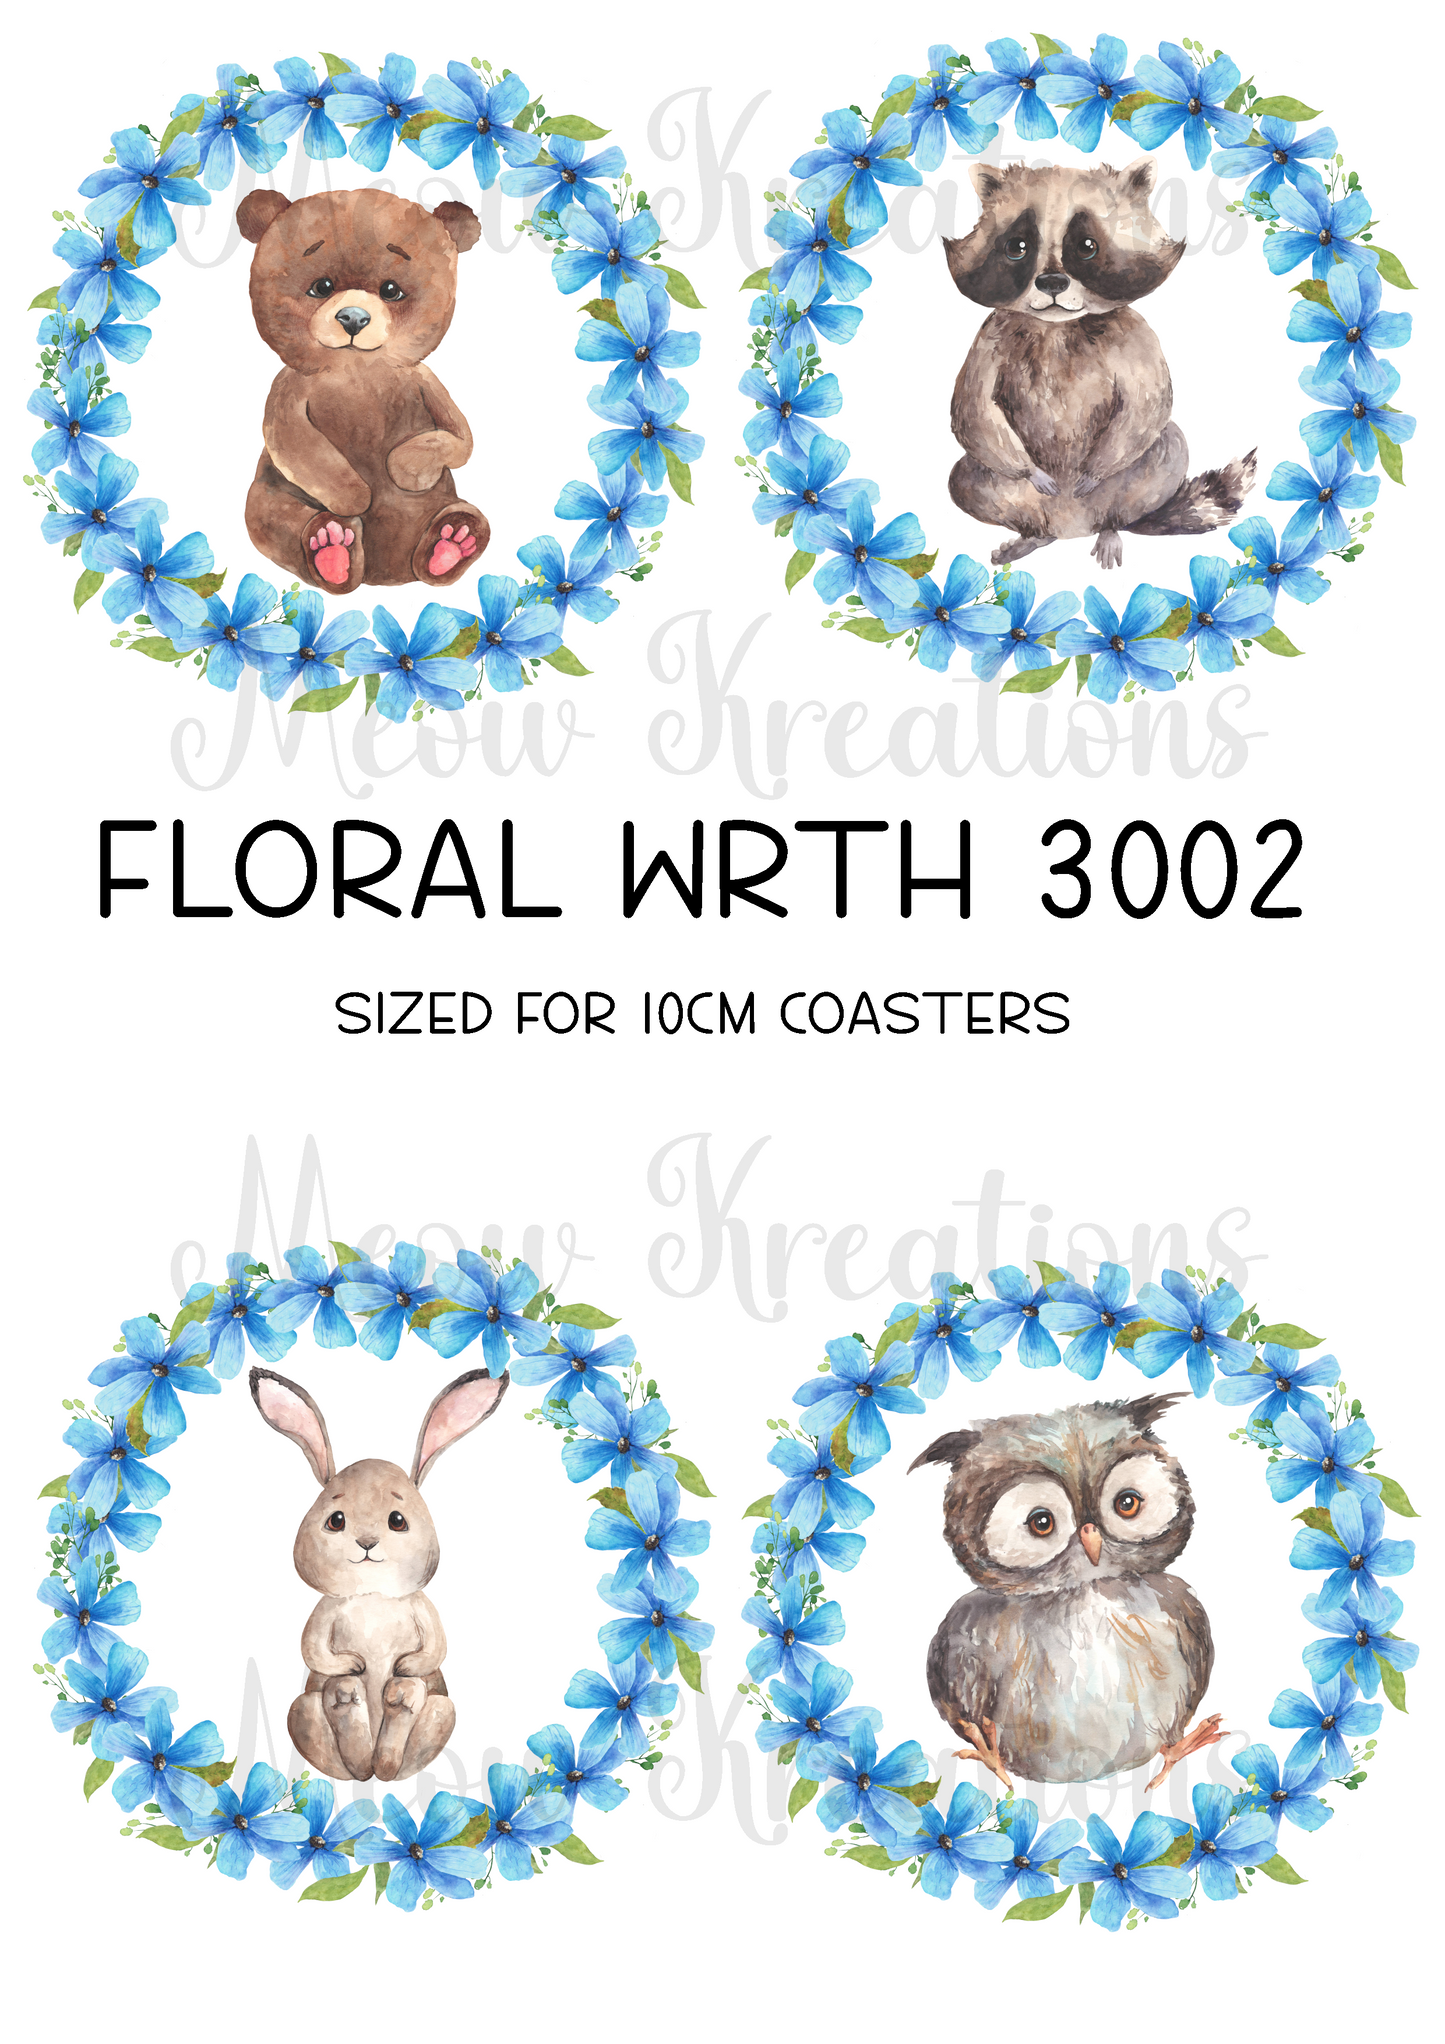 FLORAL WRTH 3002